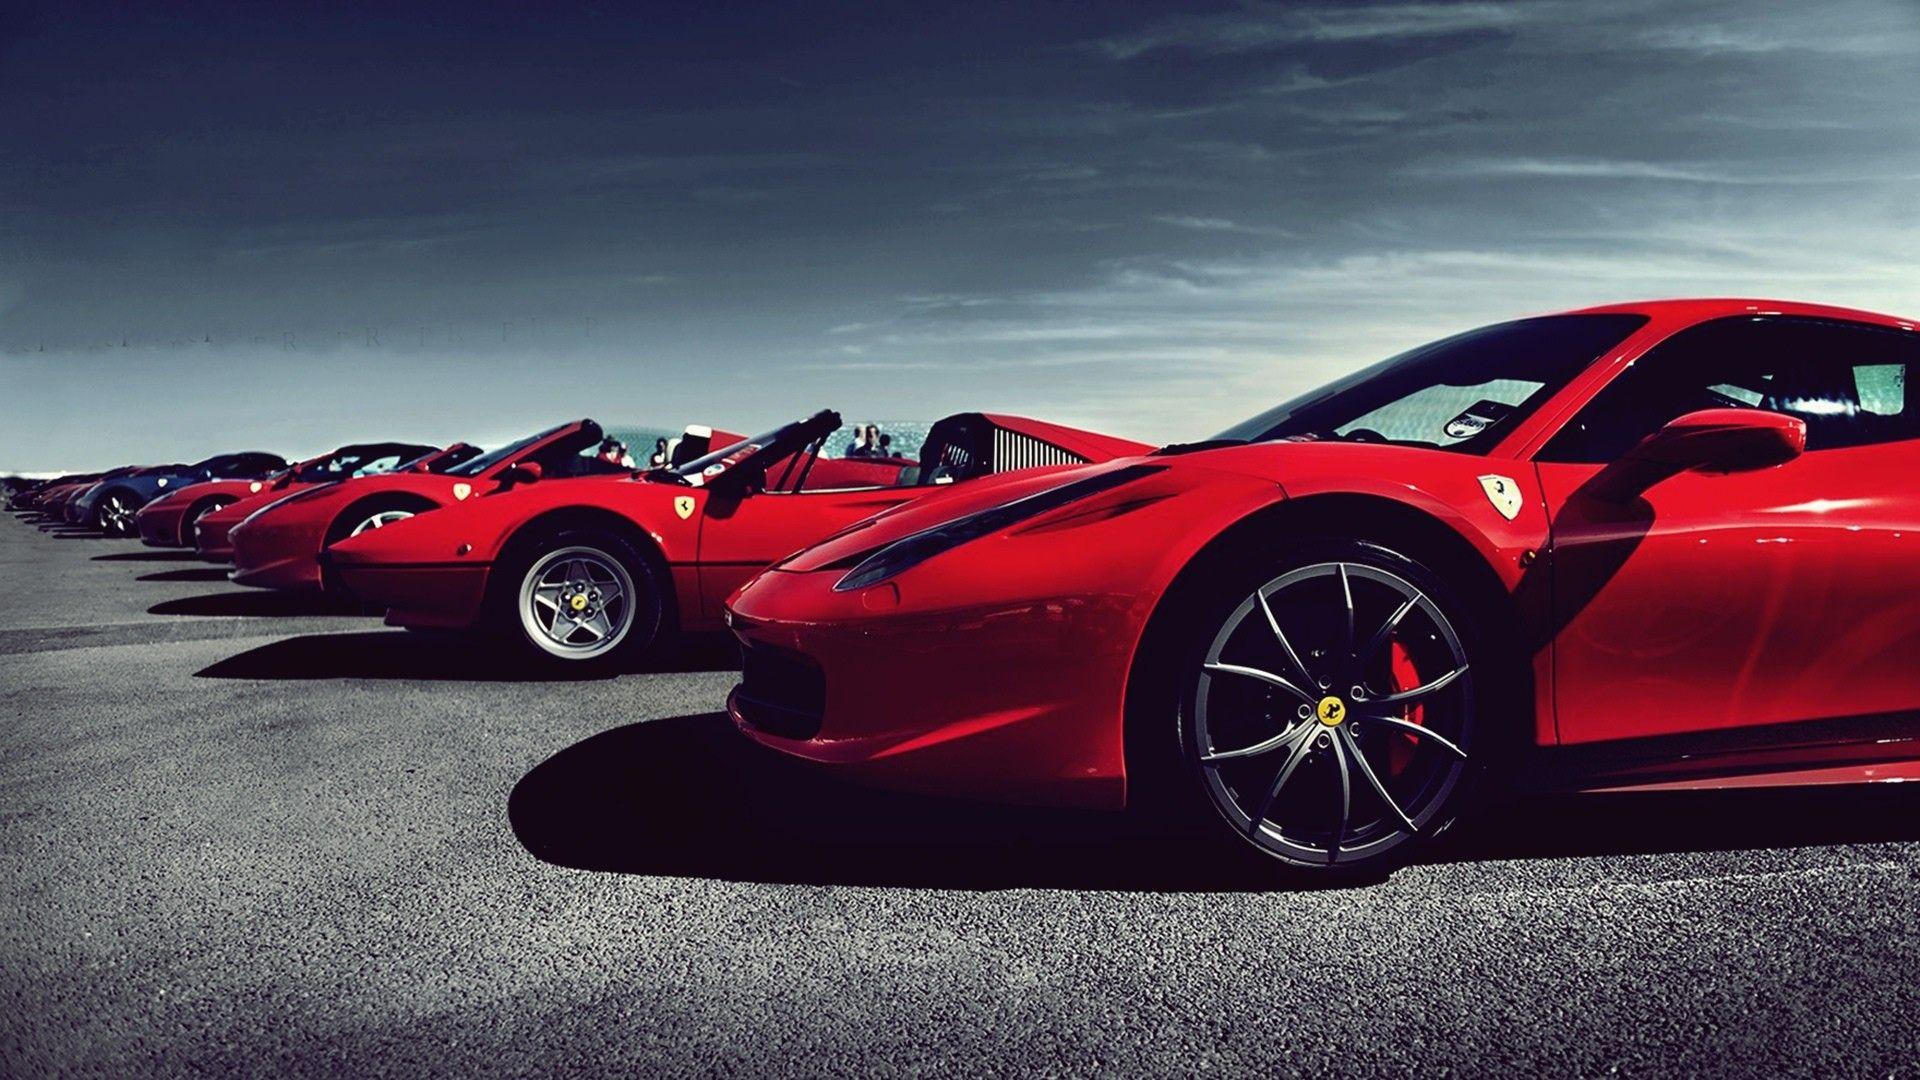 Ferrari Wallpaper 1080p. LAMBORGHINI & OTHERS. Ferrari, Latest